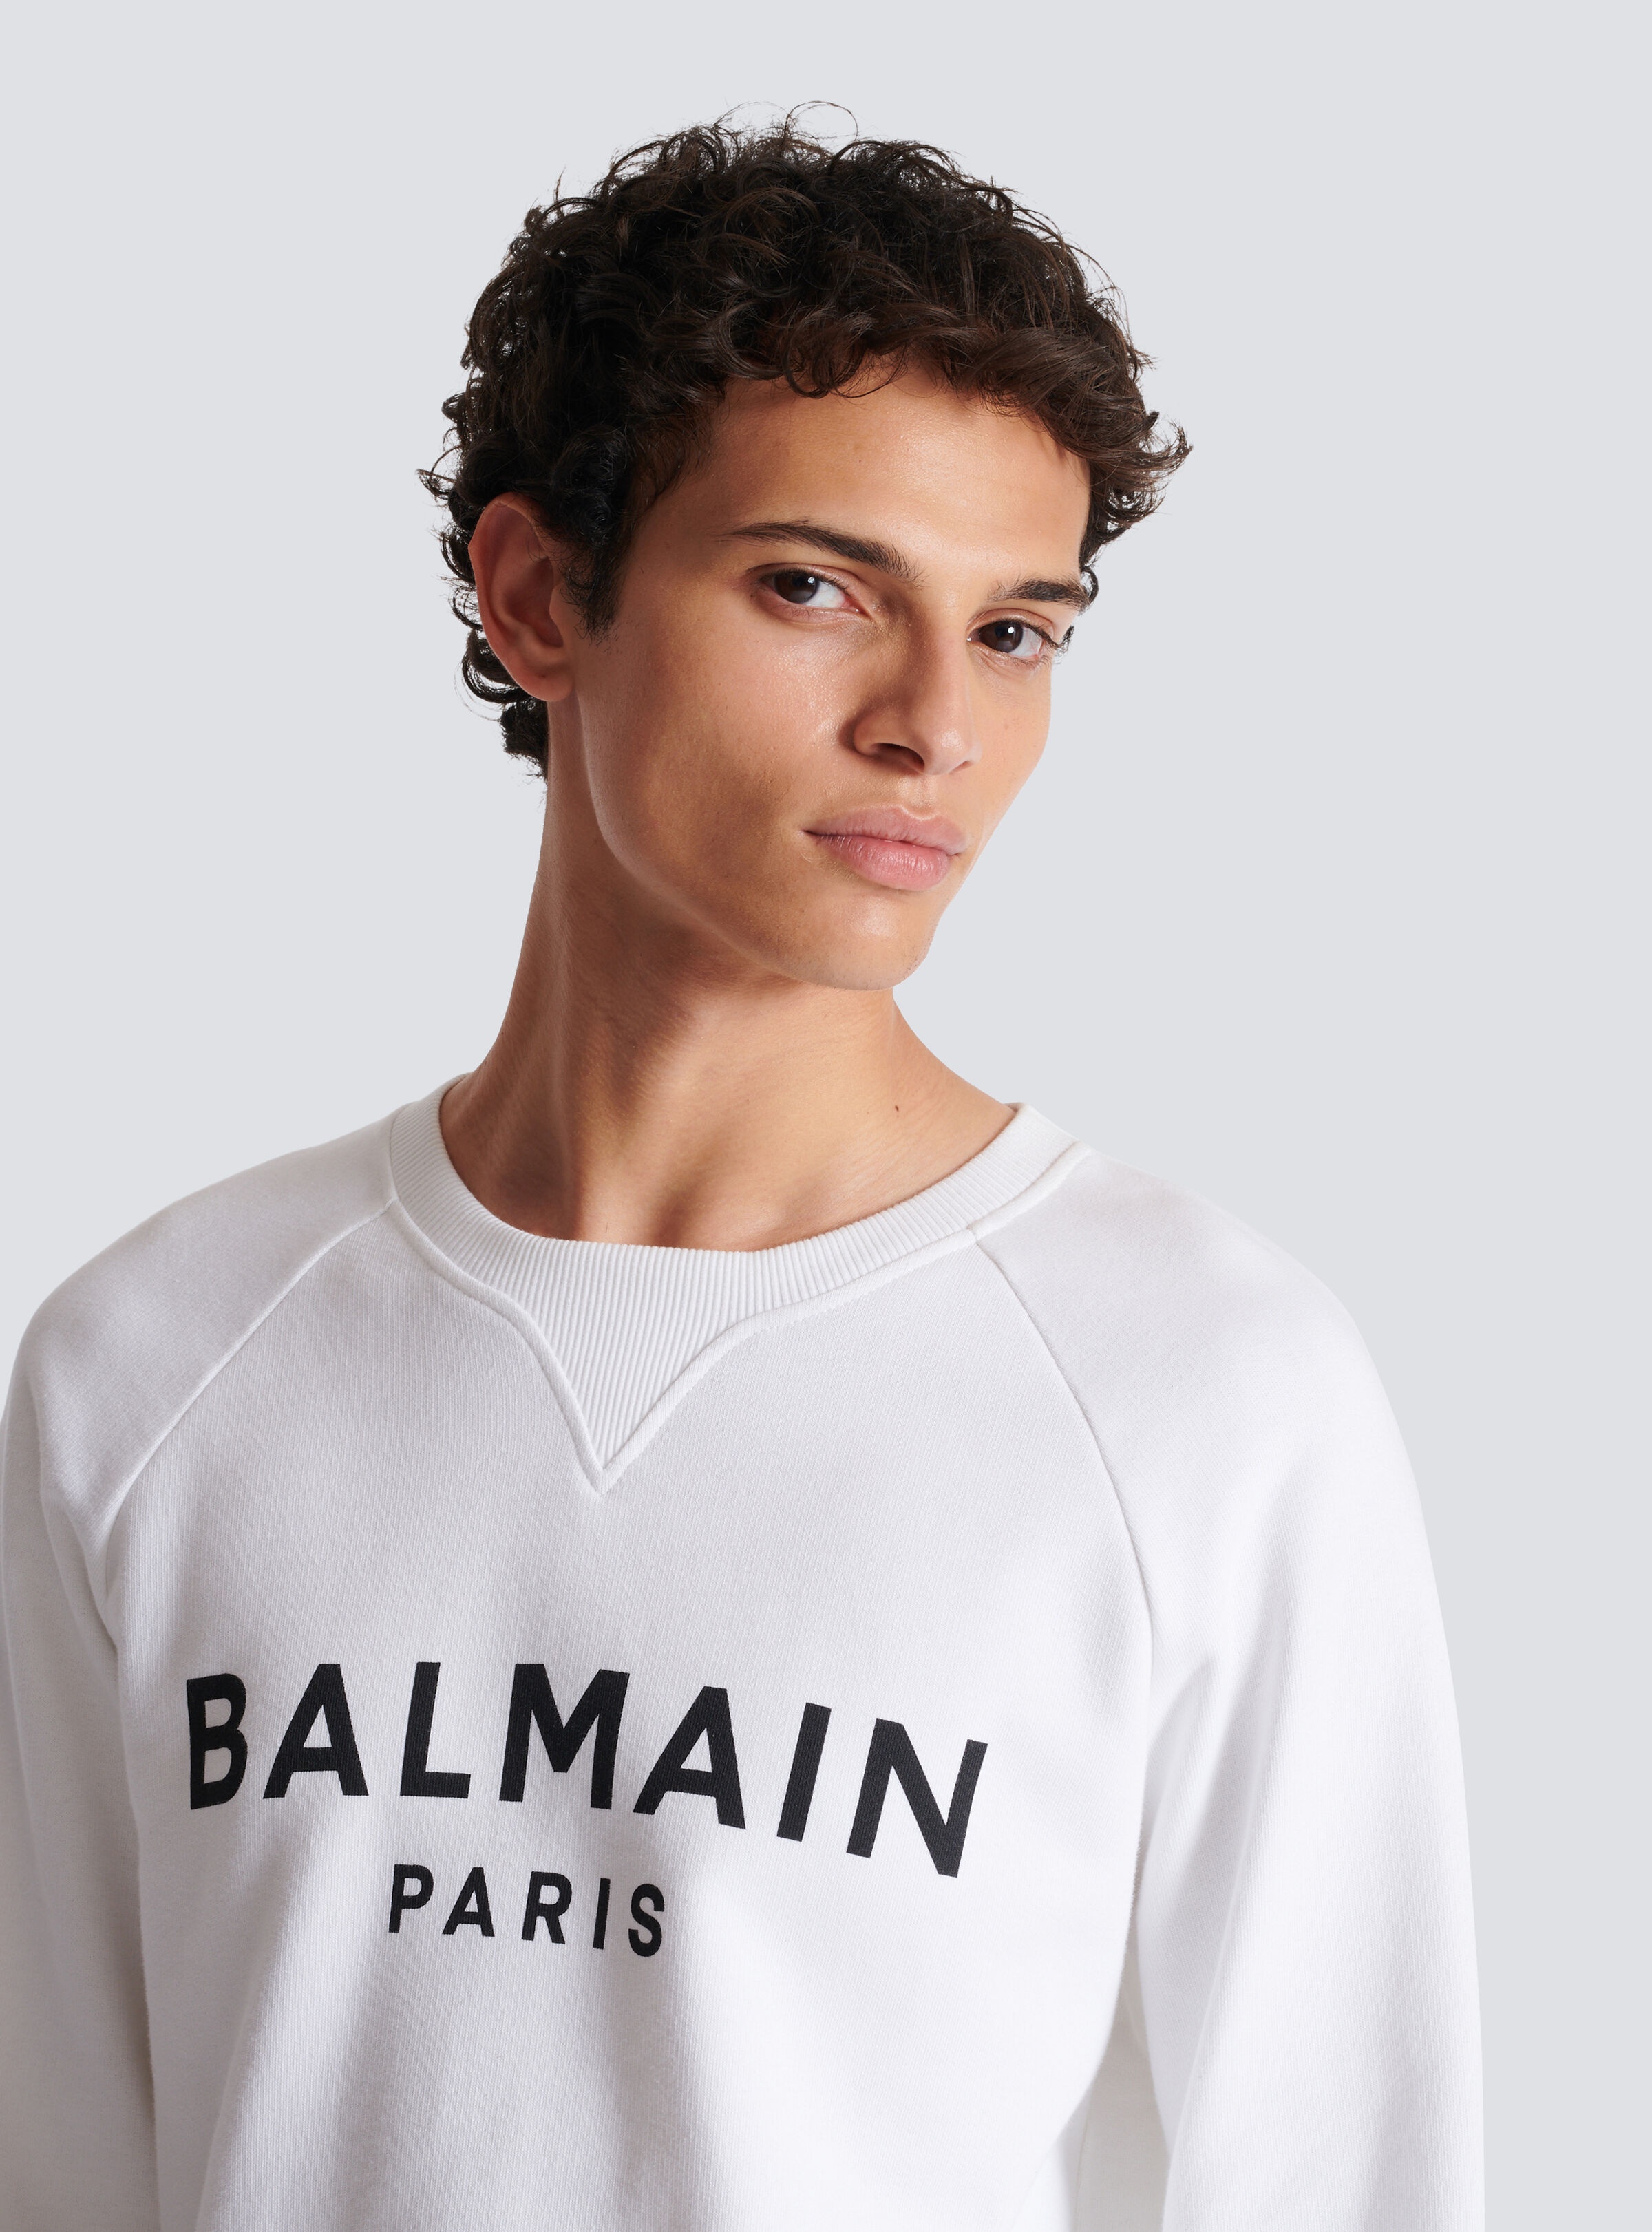 Balmain Paris sweatshirt - 7